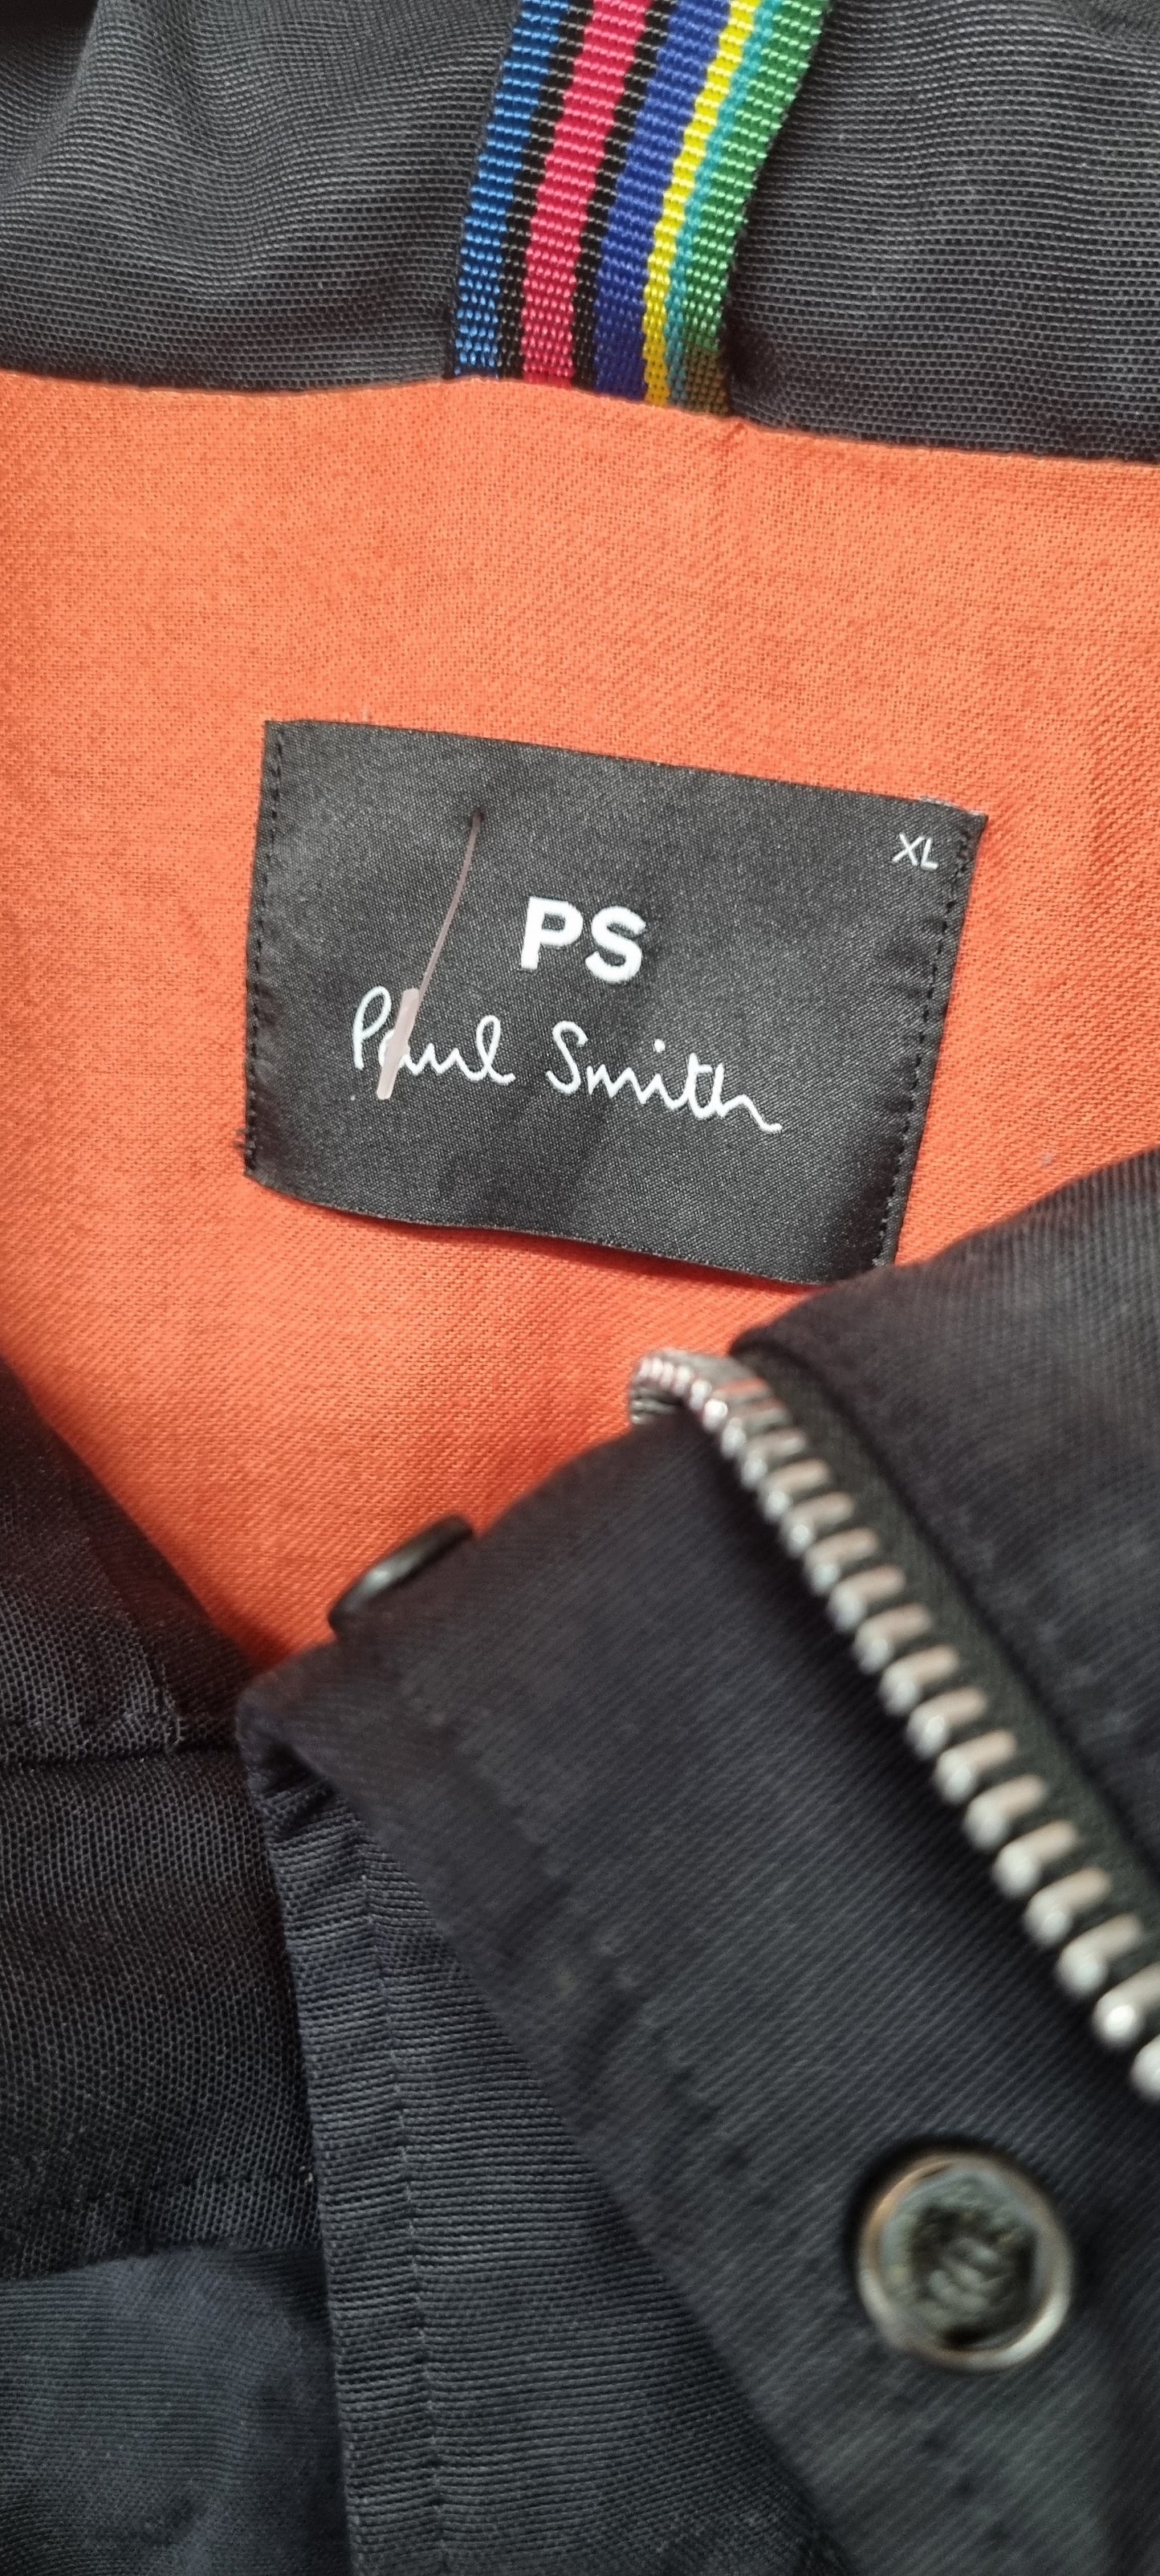 Paul Smith Black Canvas Jacket with Hood